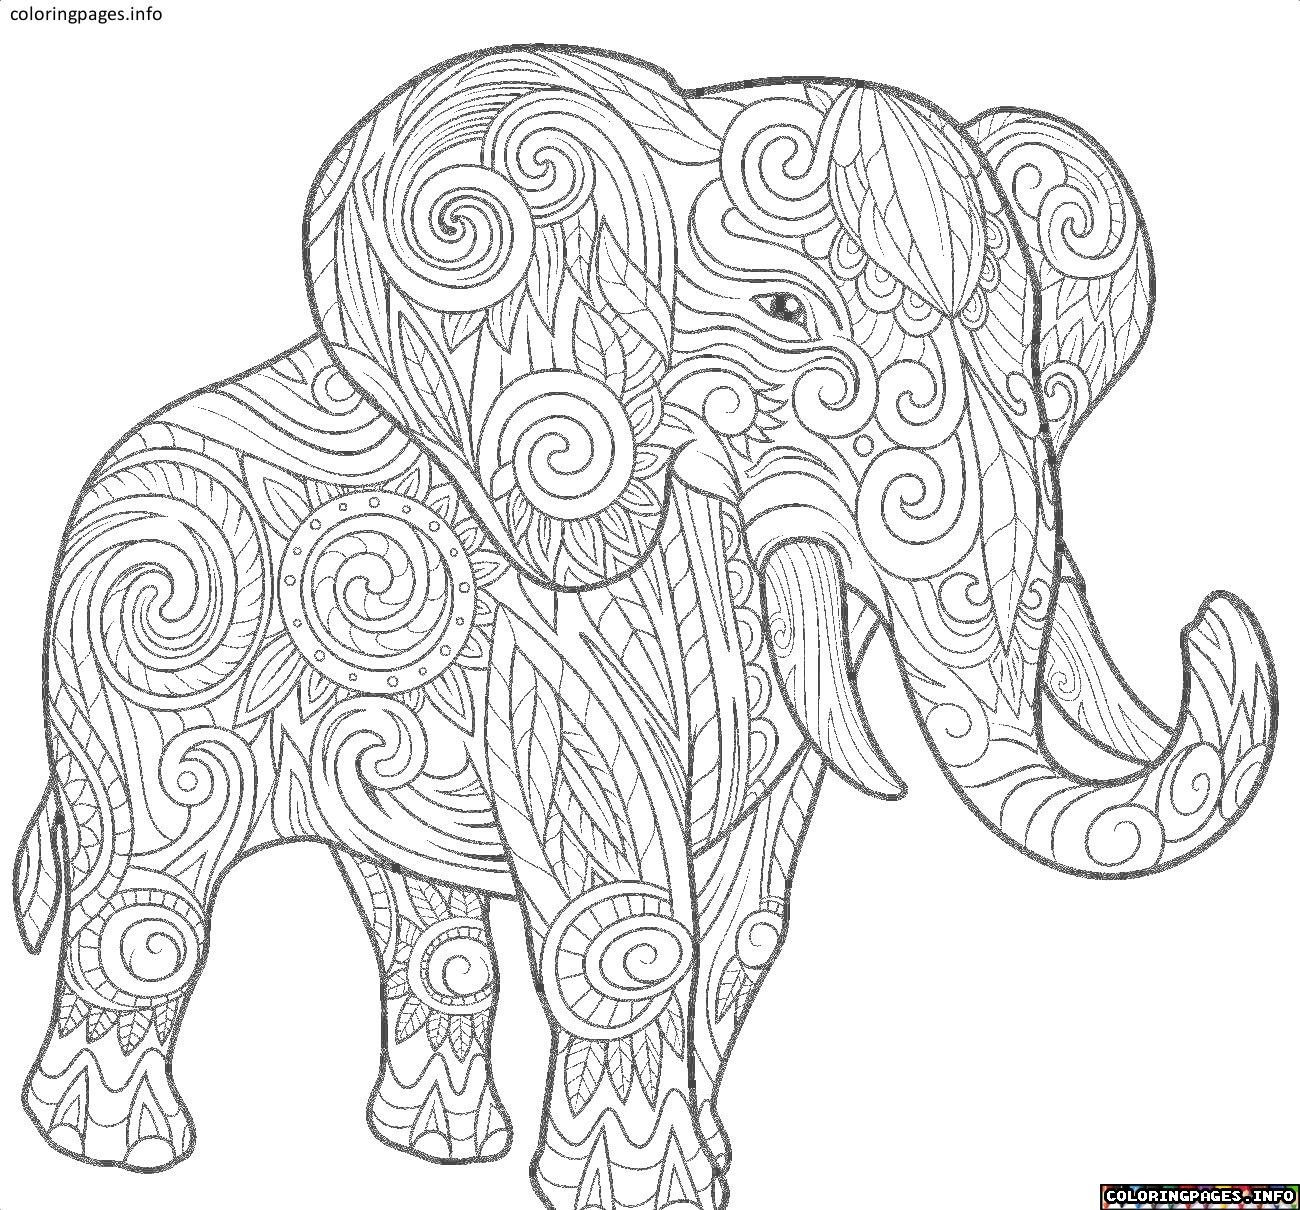 Awesome elephant mandala coloring pages design printable coloring sheet elephant coloring page animal coloring pages mandala coloring pages